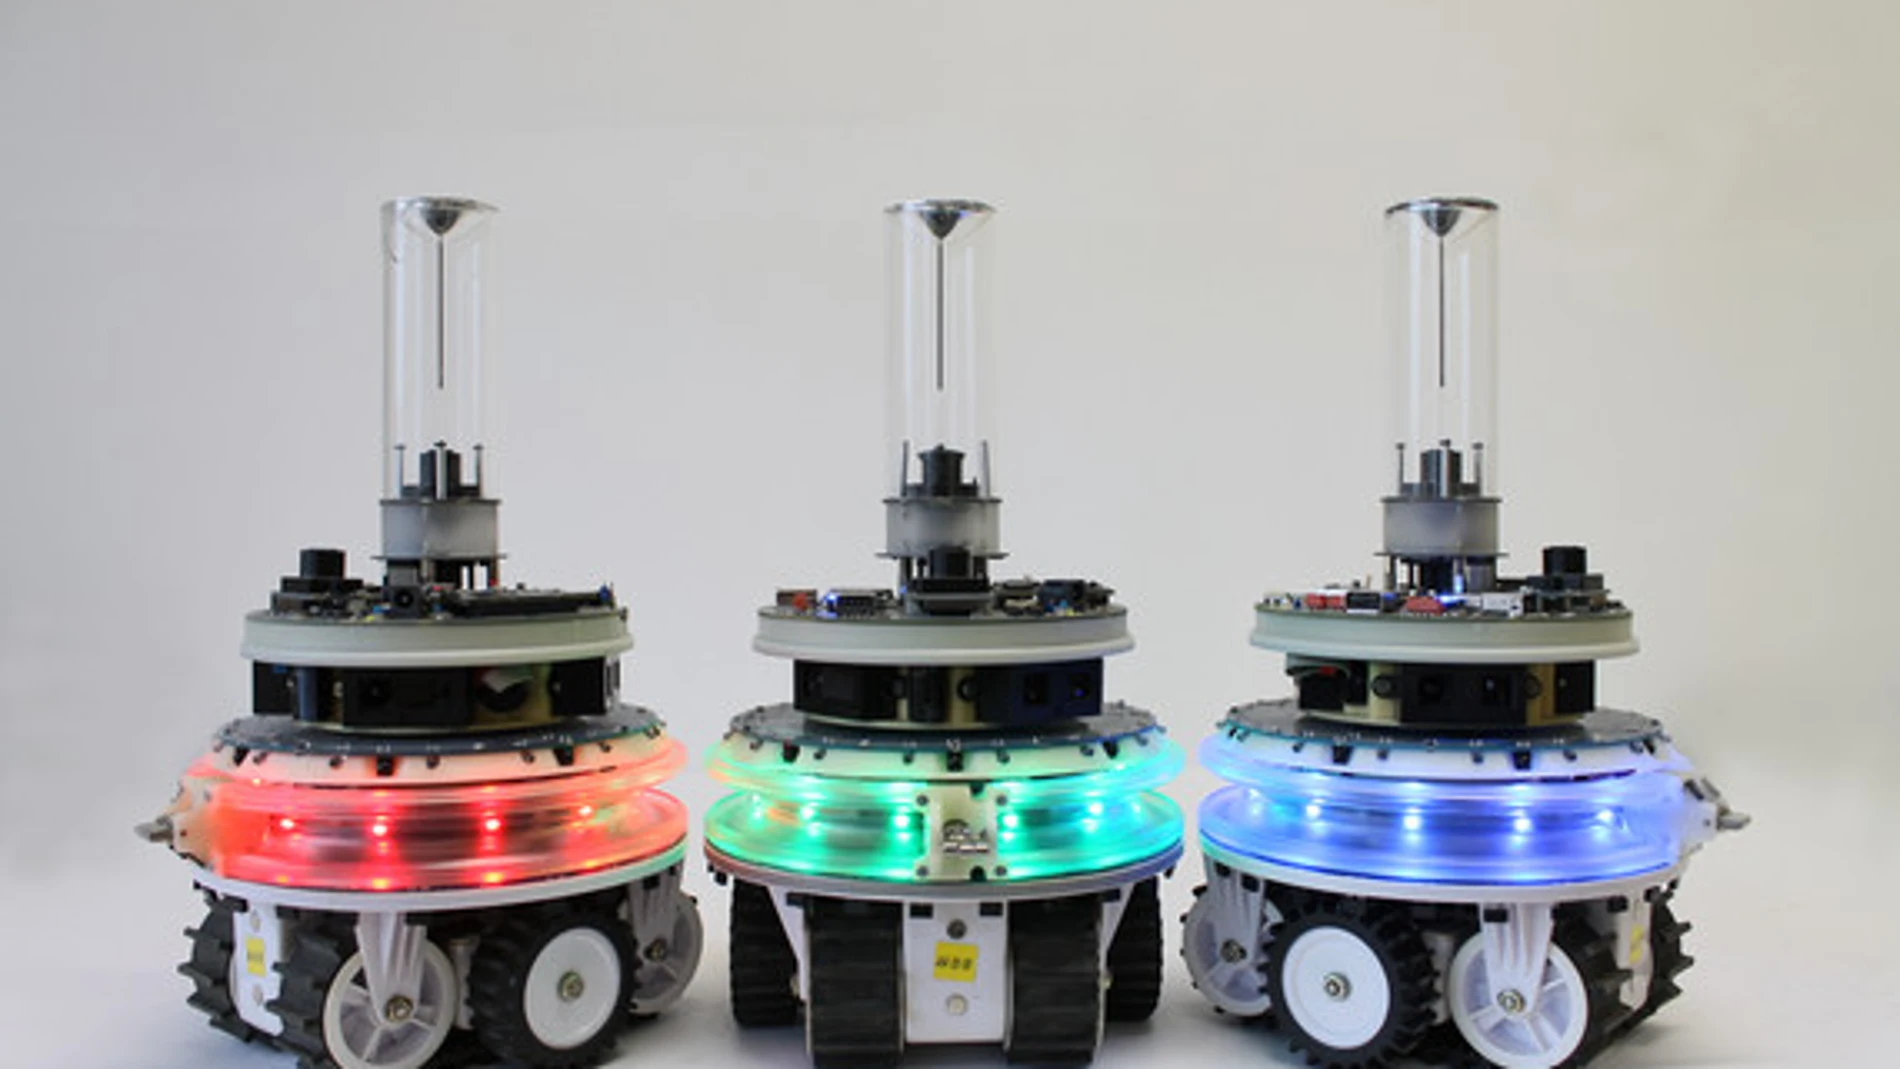 Tres robots autónomos con iluminación LED en diferentes colores